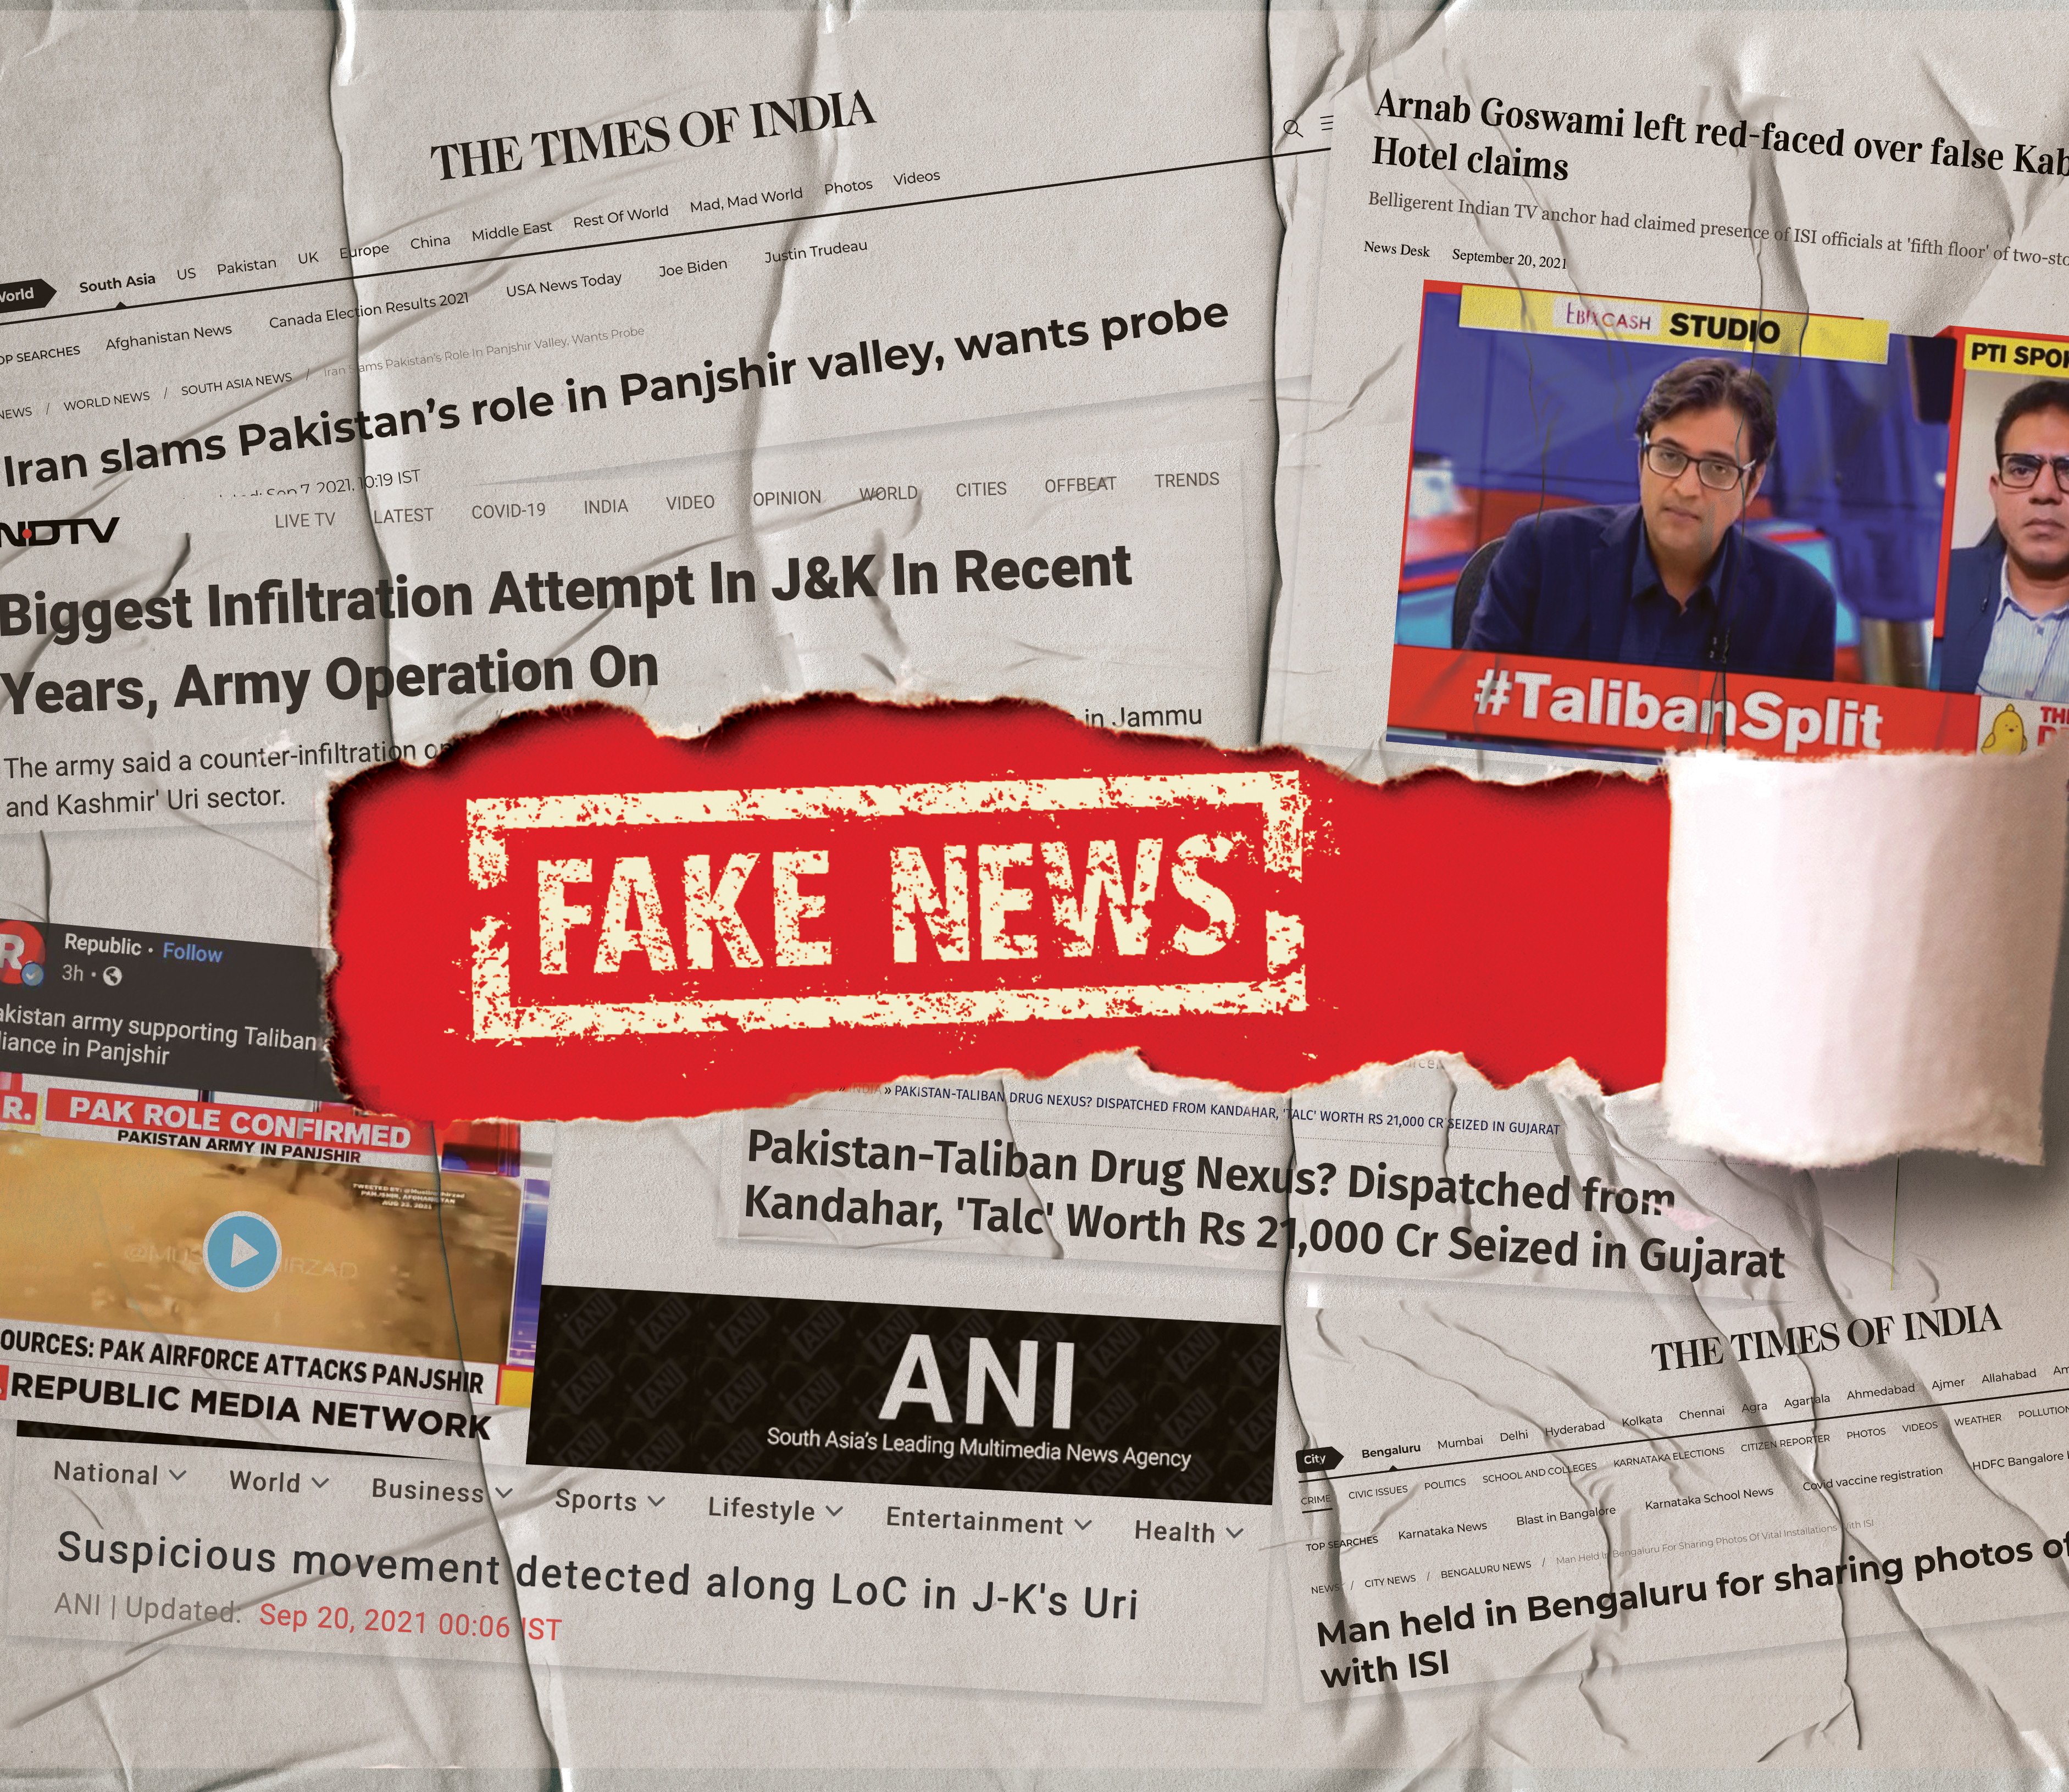 Photo of Indian news agency continues pushing fake narratives against Pakistan, China